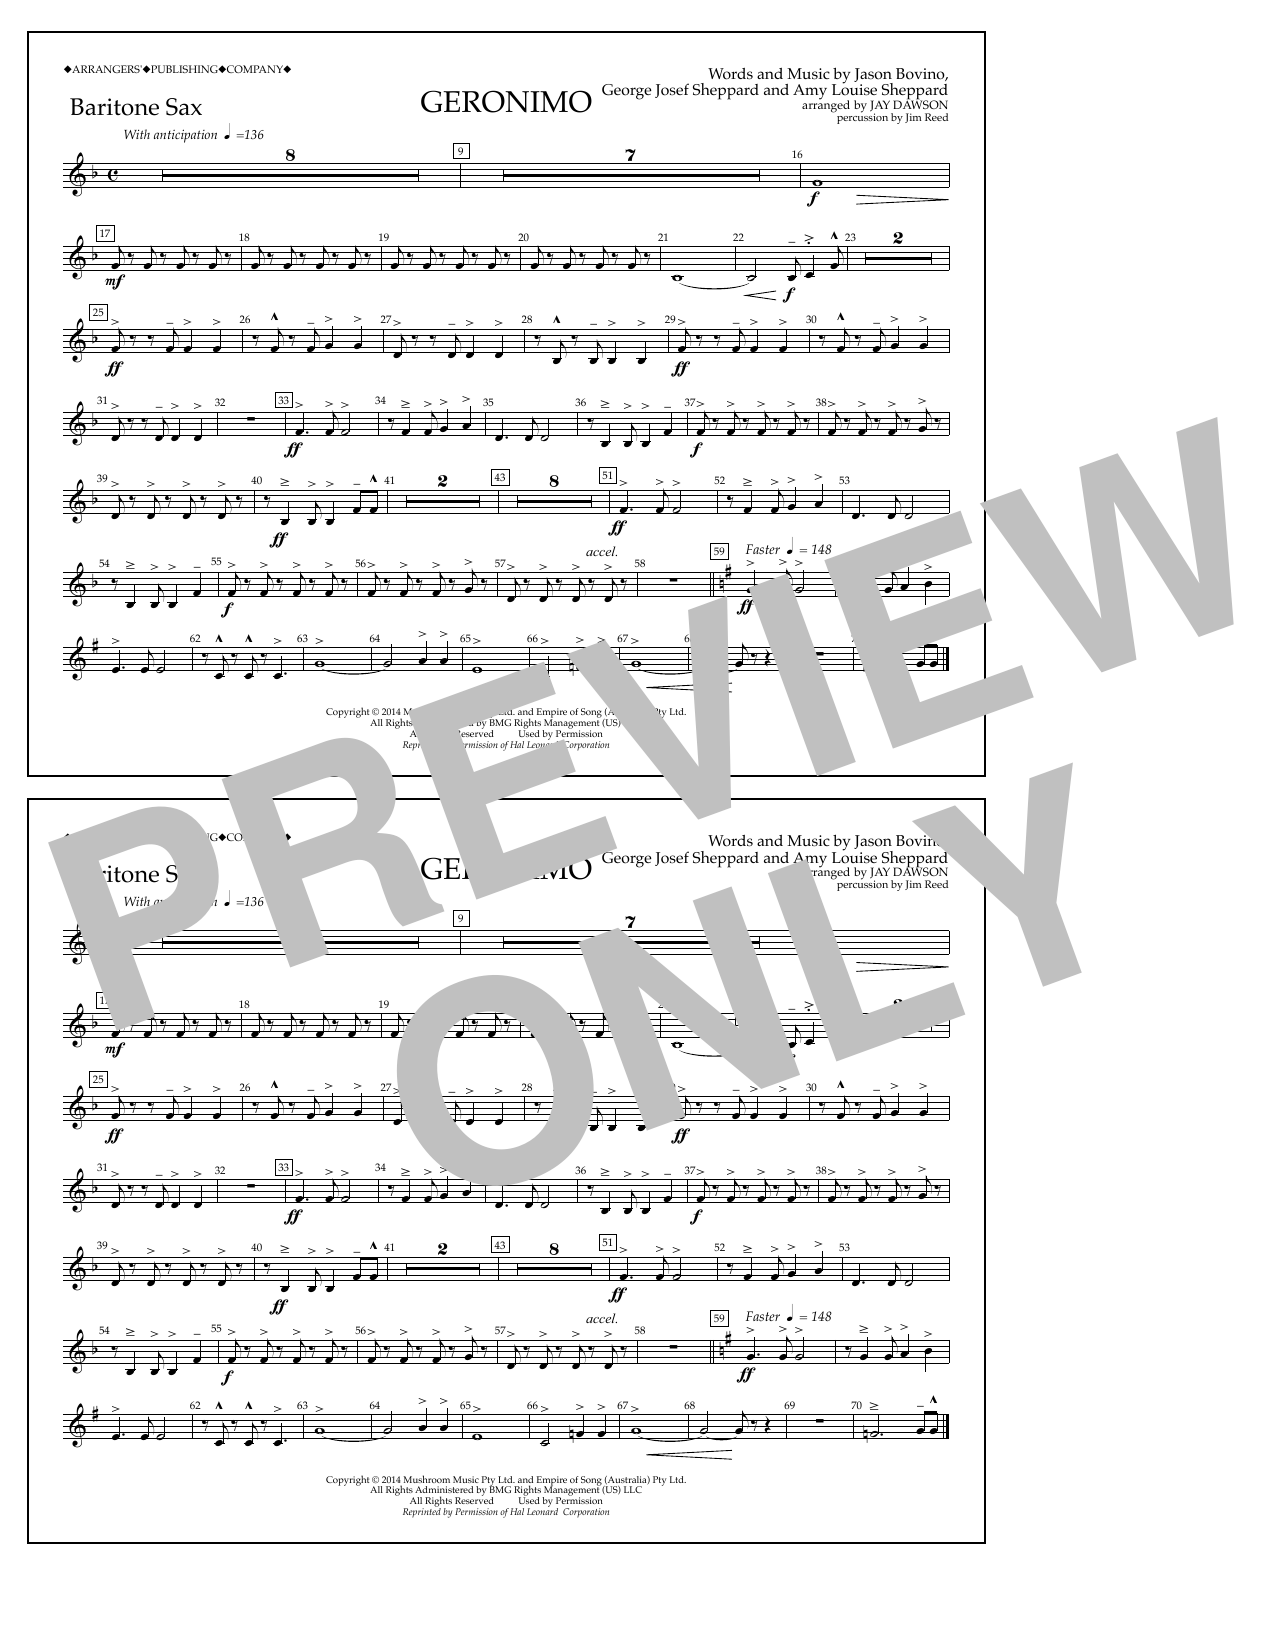 Jay Dawson Geronimo - Baritone Sax Sheet Music Notes & Chords for Marching Band - Download or Print PDF